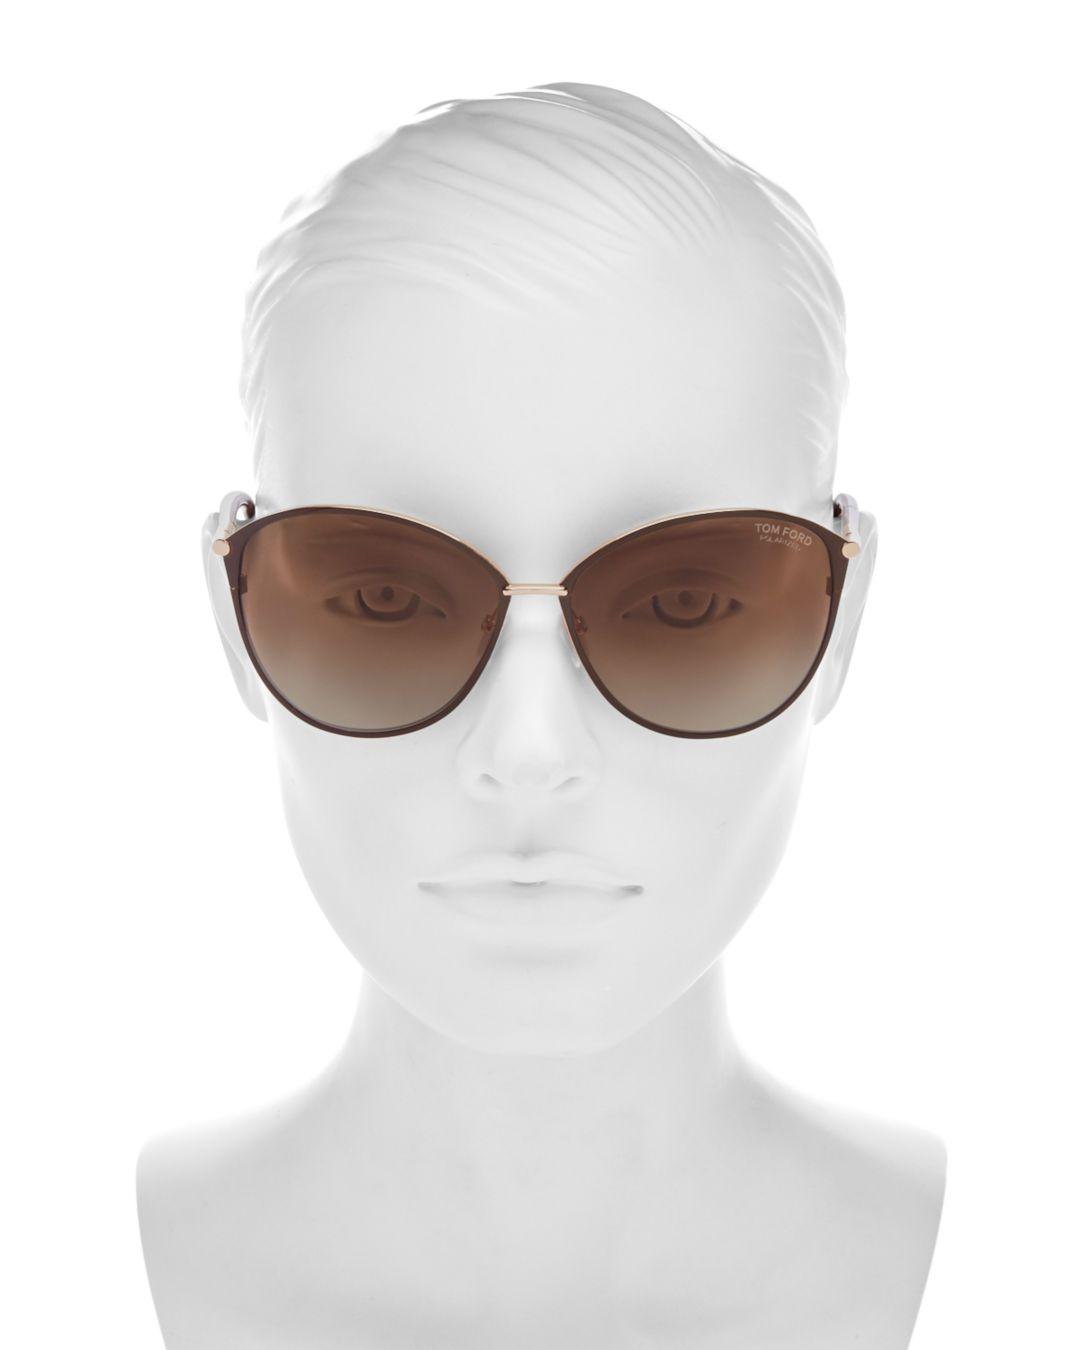 Tom Ford Women's Penelope Polarized Cat Eye Sunglasses in Brown - Lyst